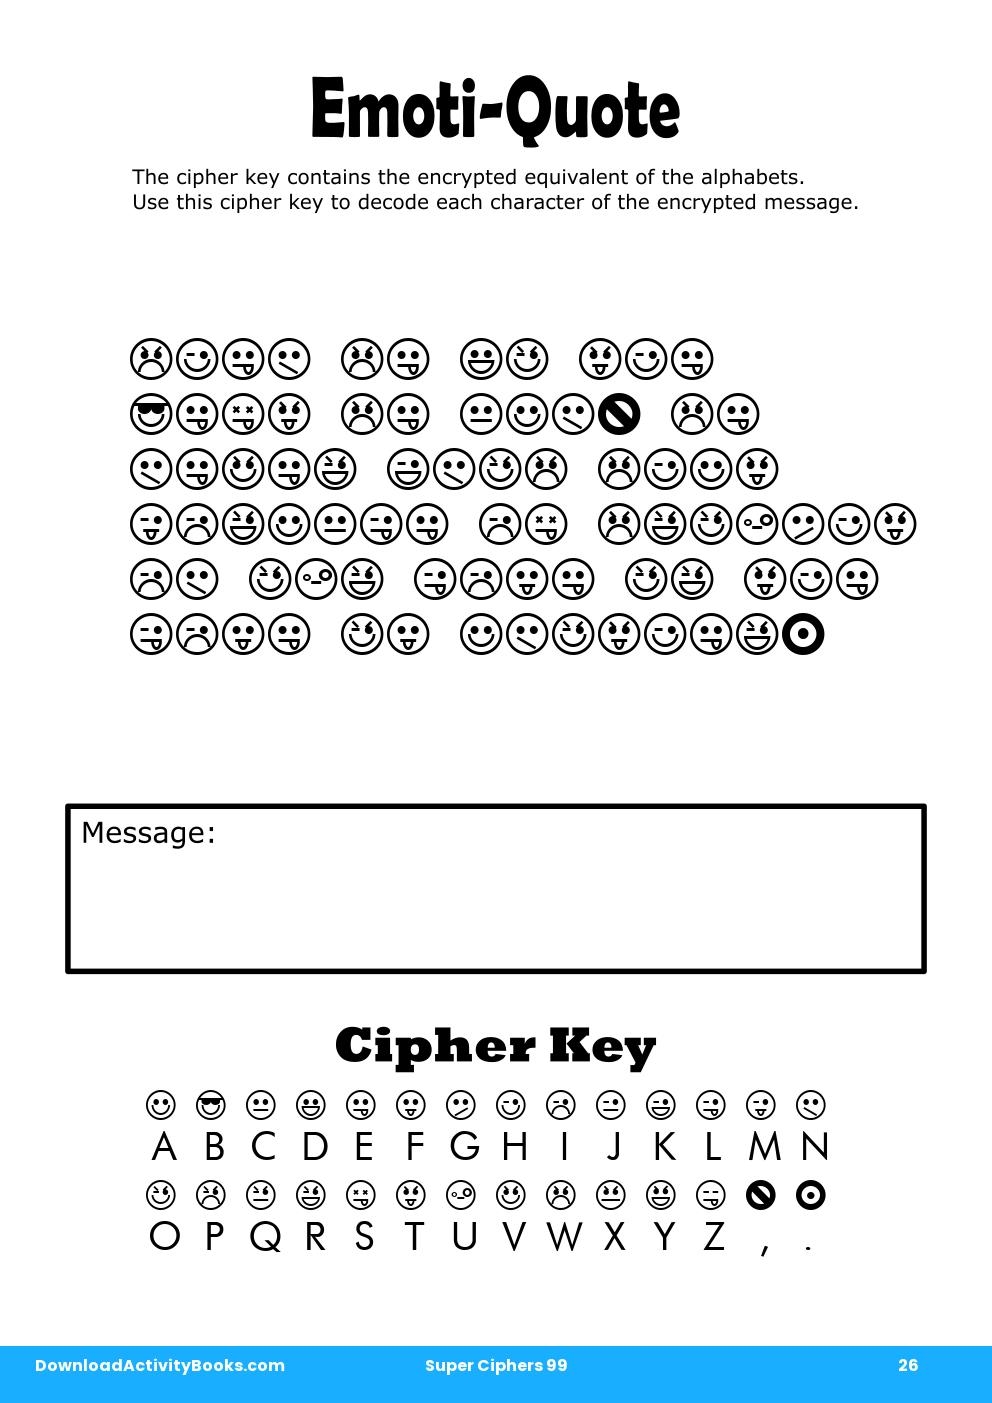 Emoti-Quote in Super Ciphers 99